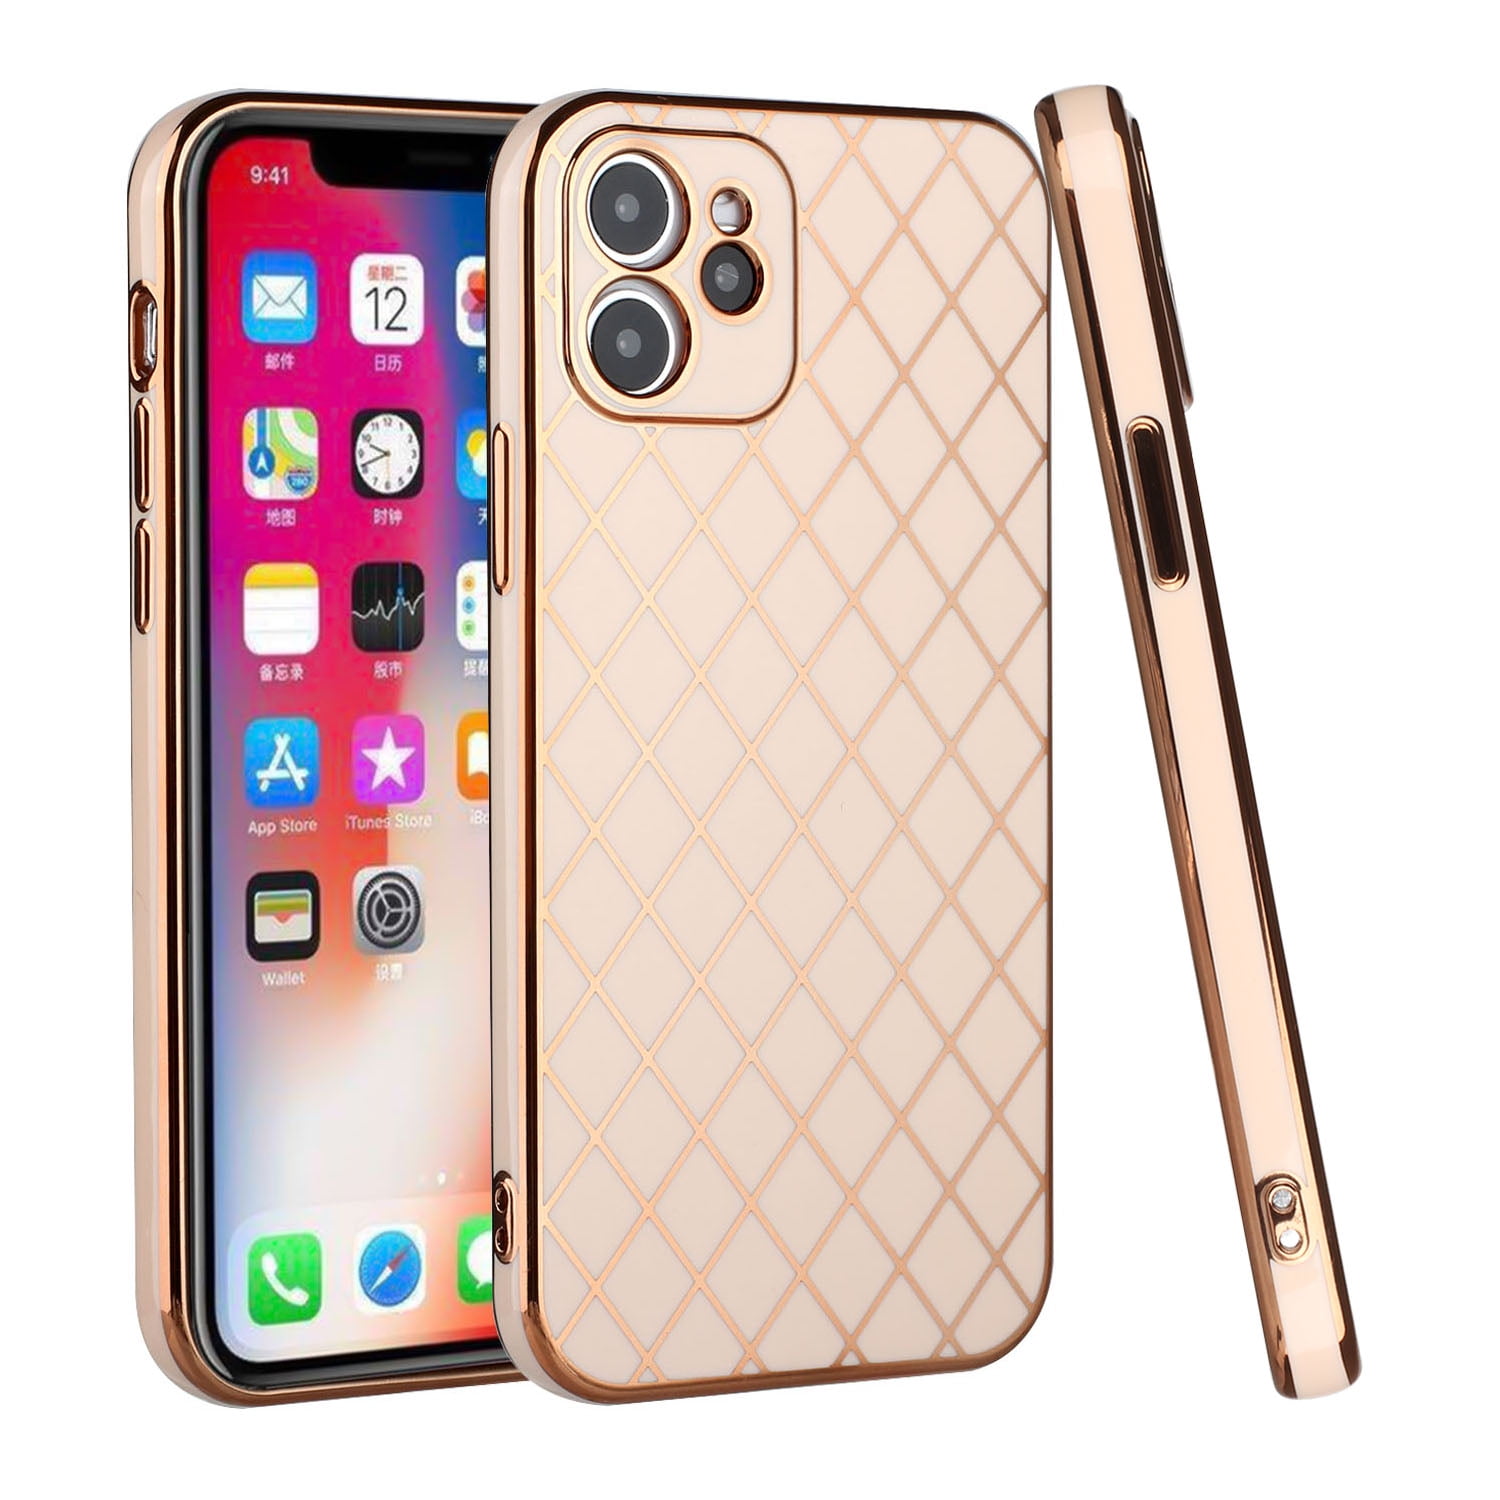 Green Diamond Grid Cute Phone Case for iPhone 6, 7, 8, SE 2022, 11